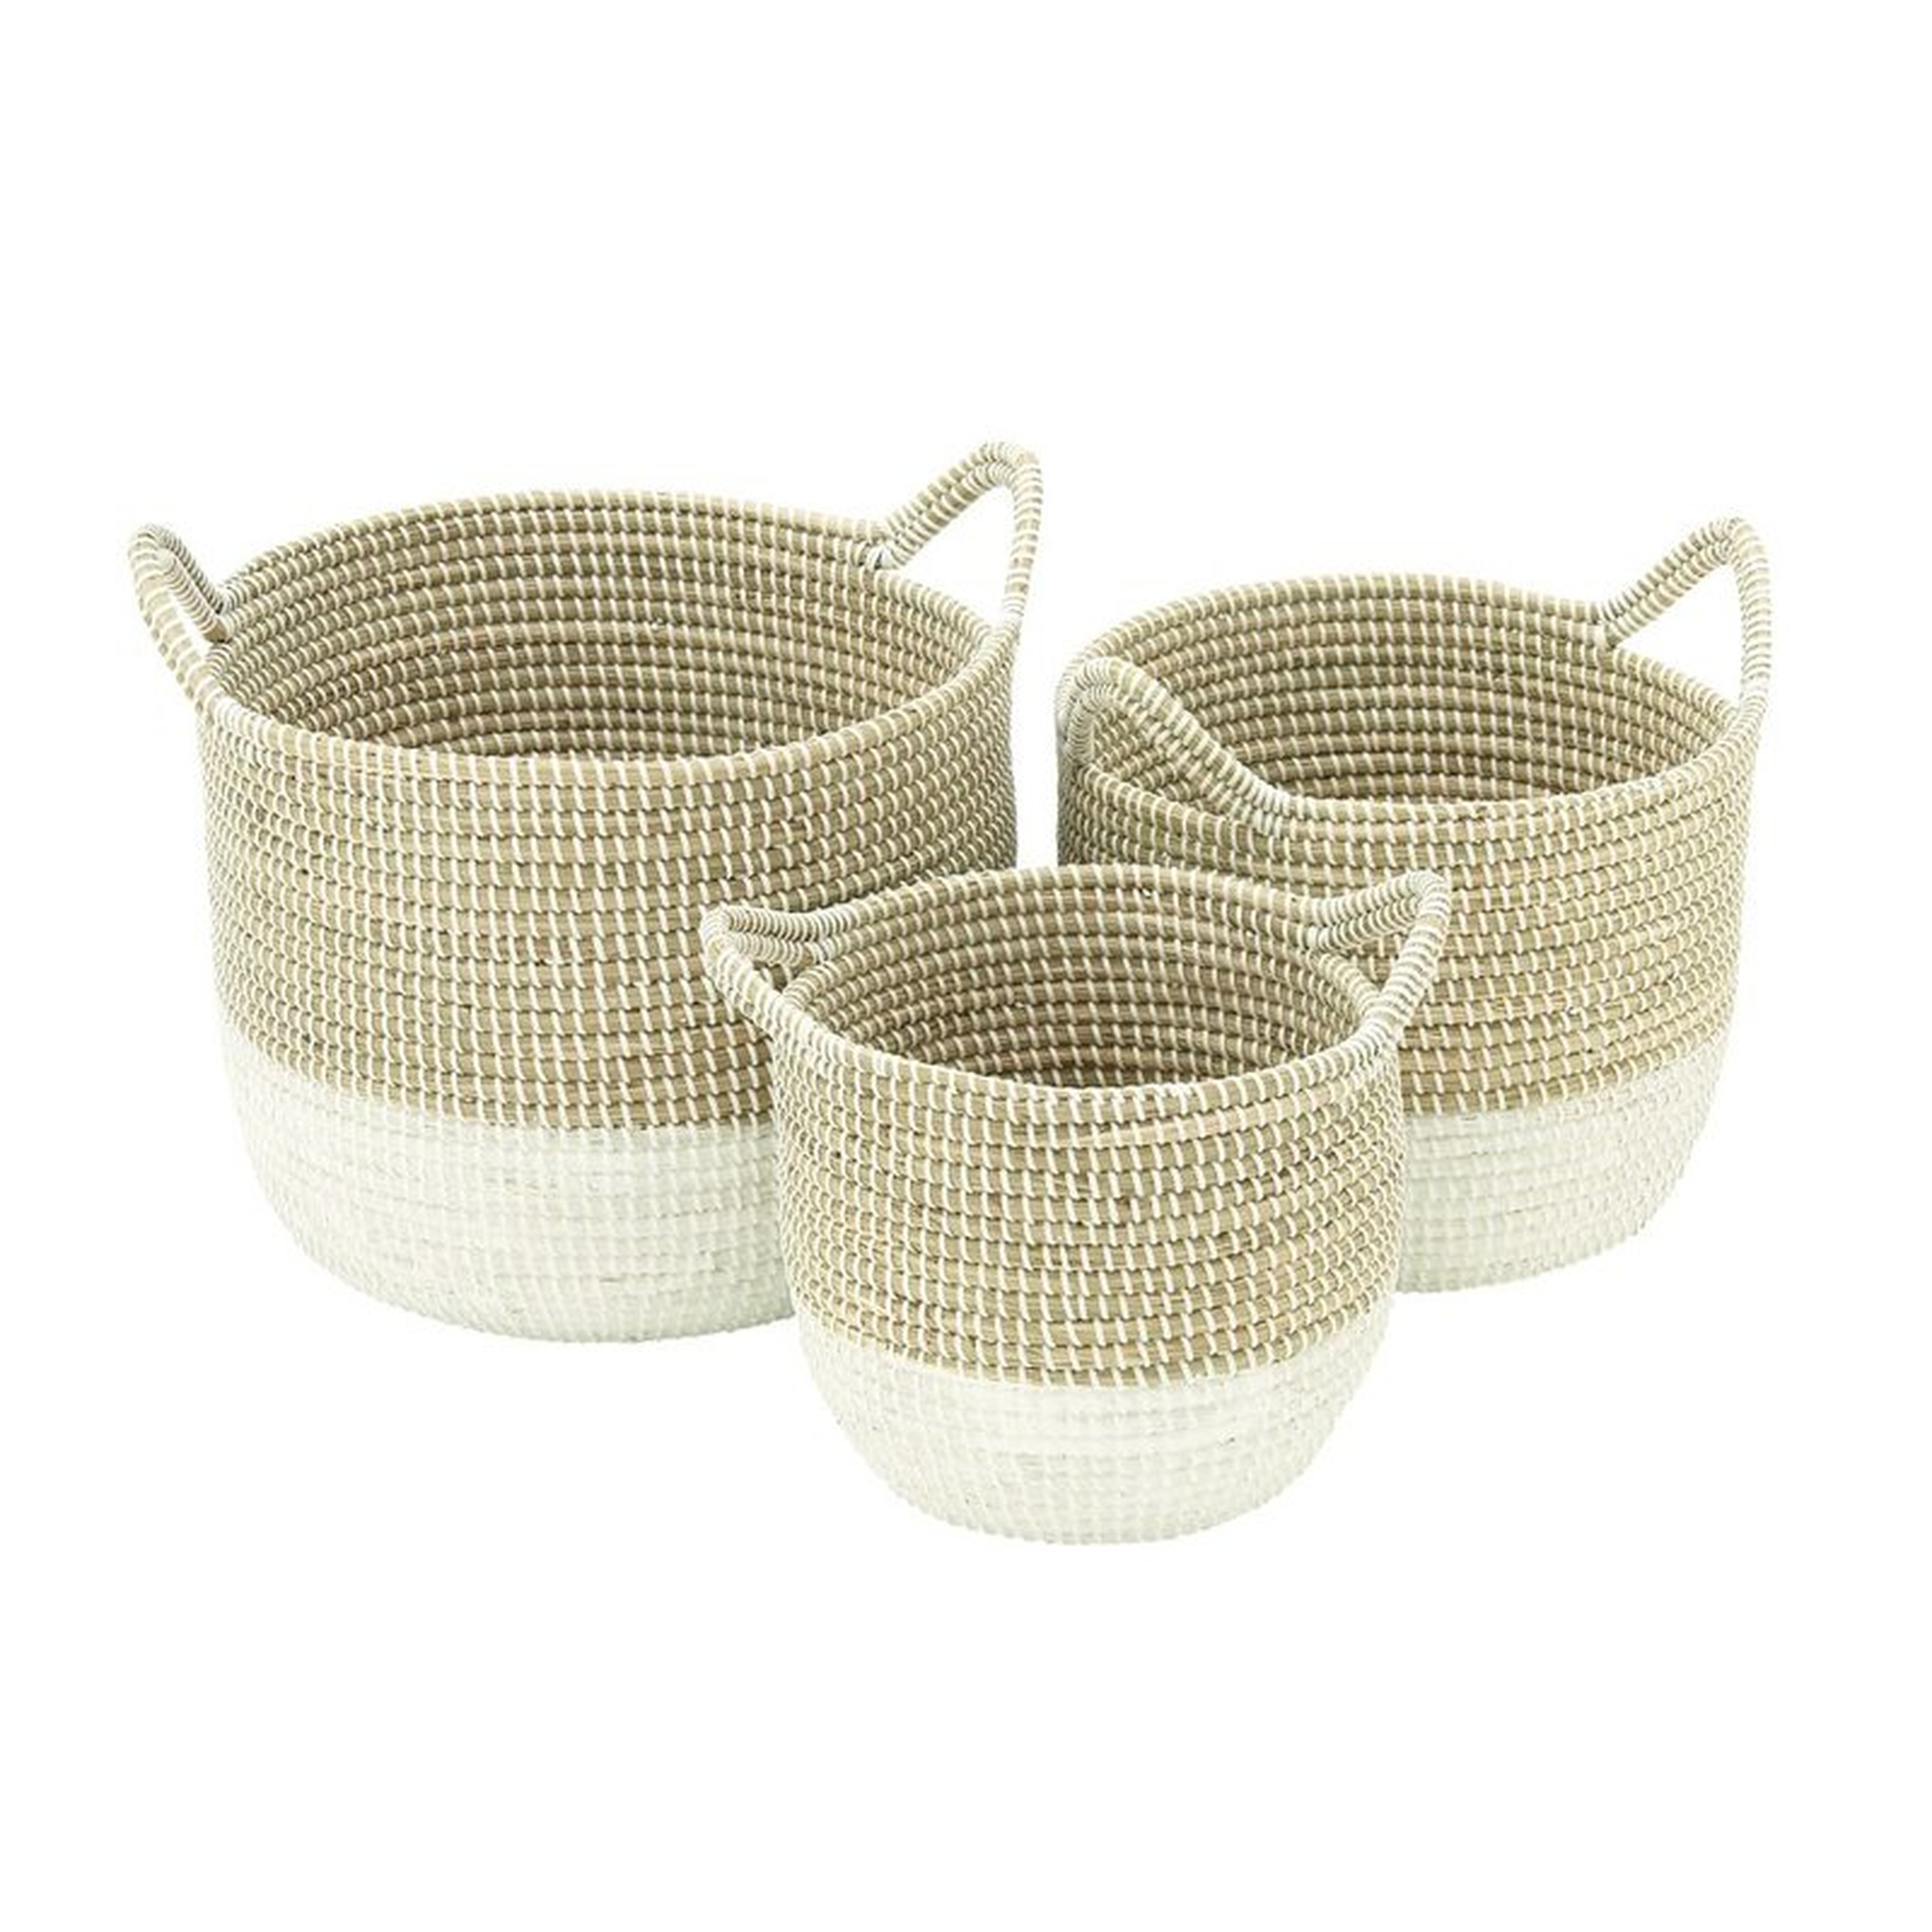 "Seagrass 3 Piece Basket Set" - Wayfair